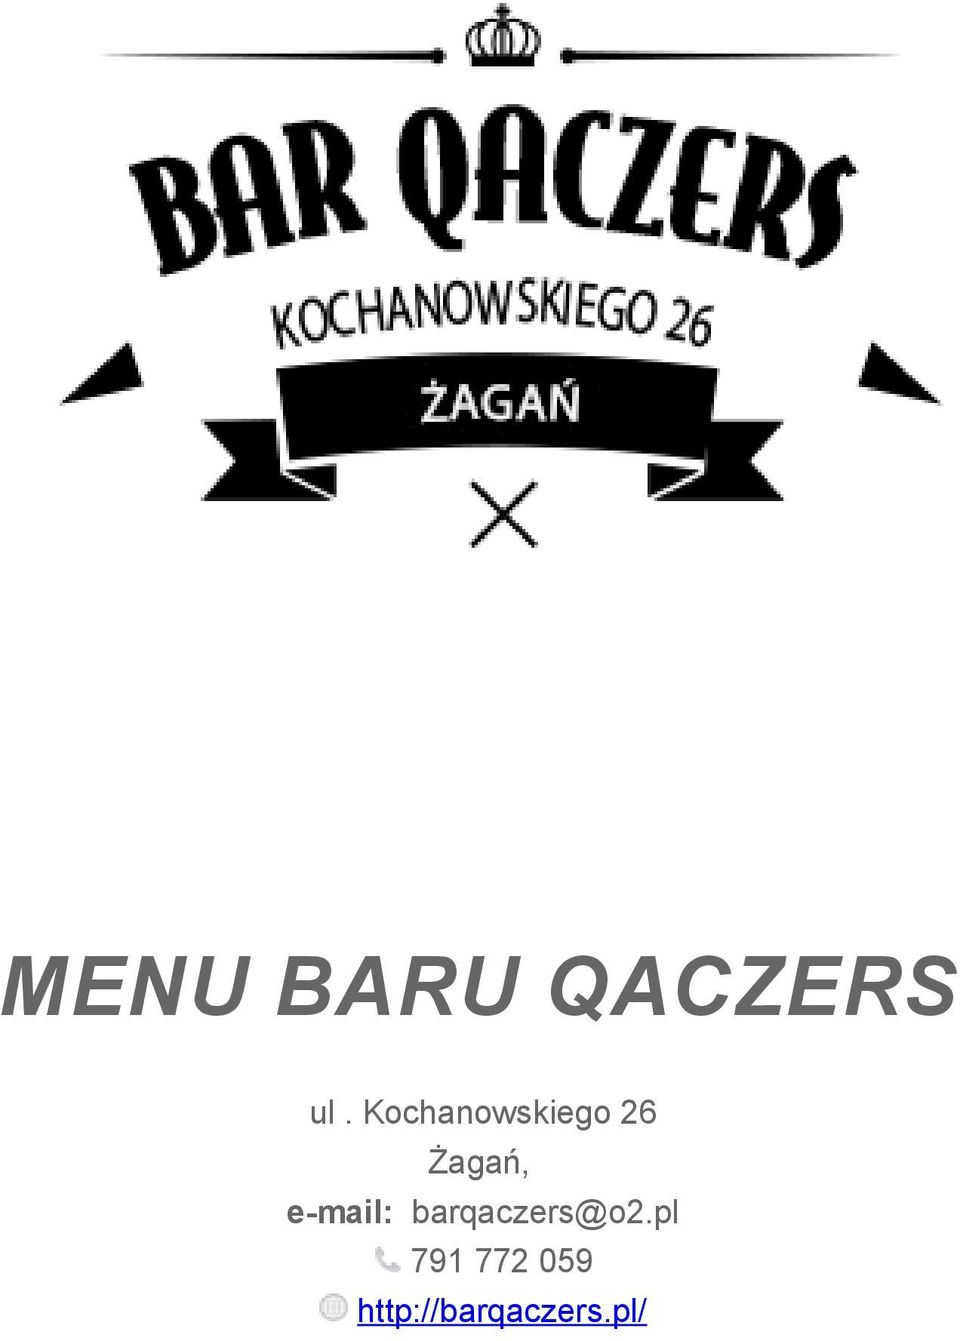 e-mail: barqaczers@o2.